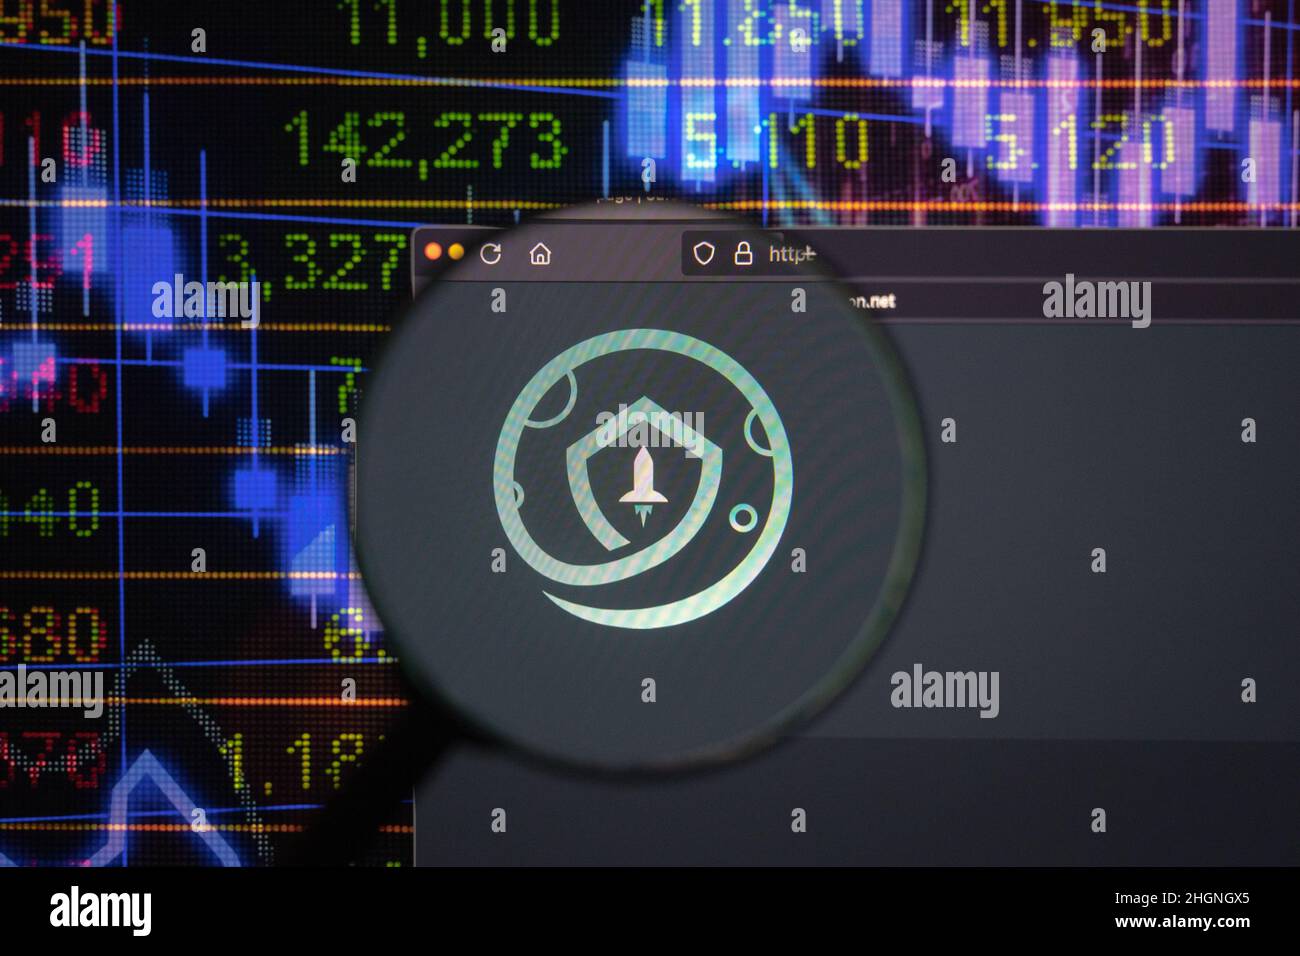 Safemoon crypto company logo on a website, seen on a computer screen through a magnifying glass. Stock Photo